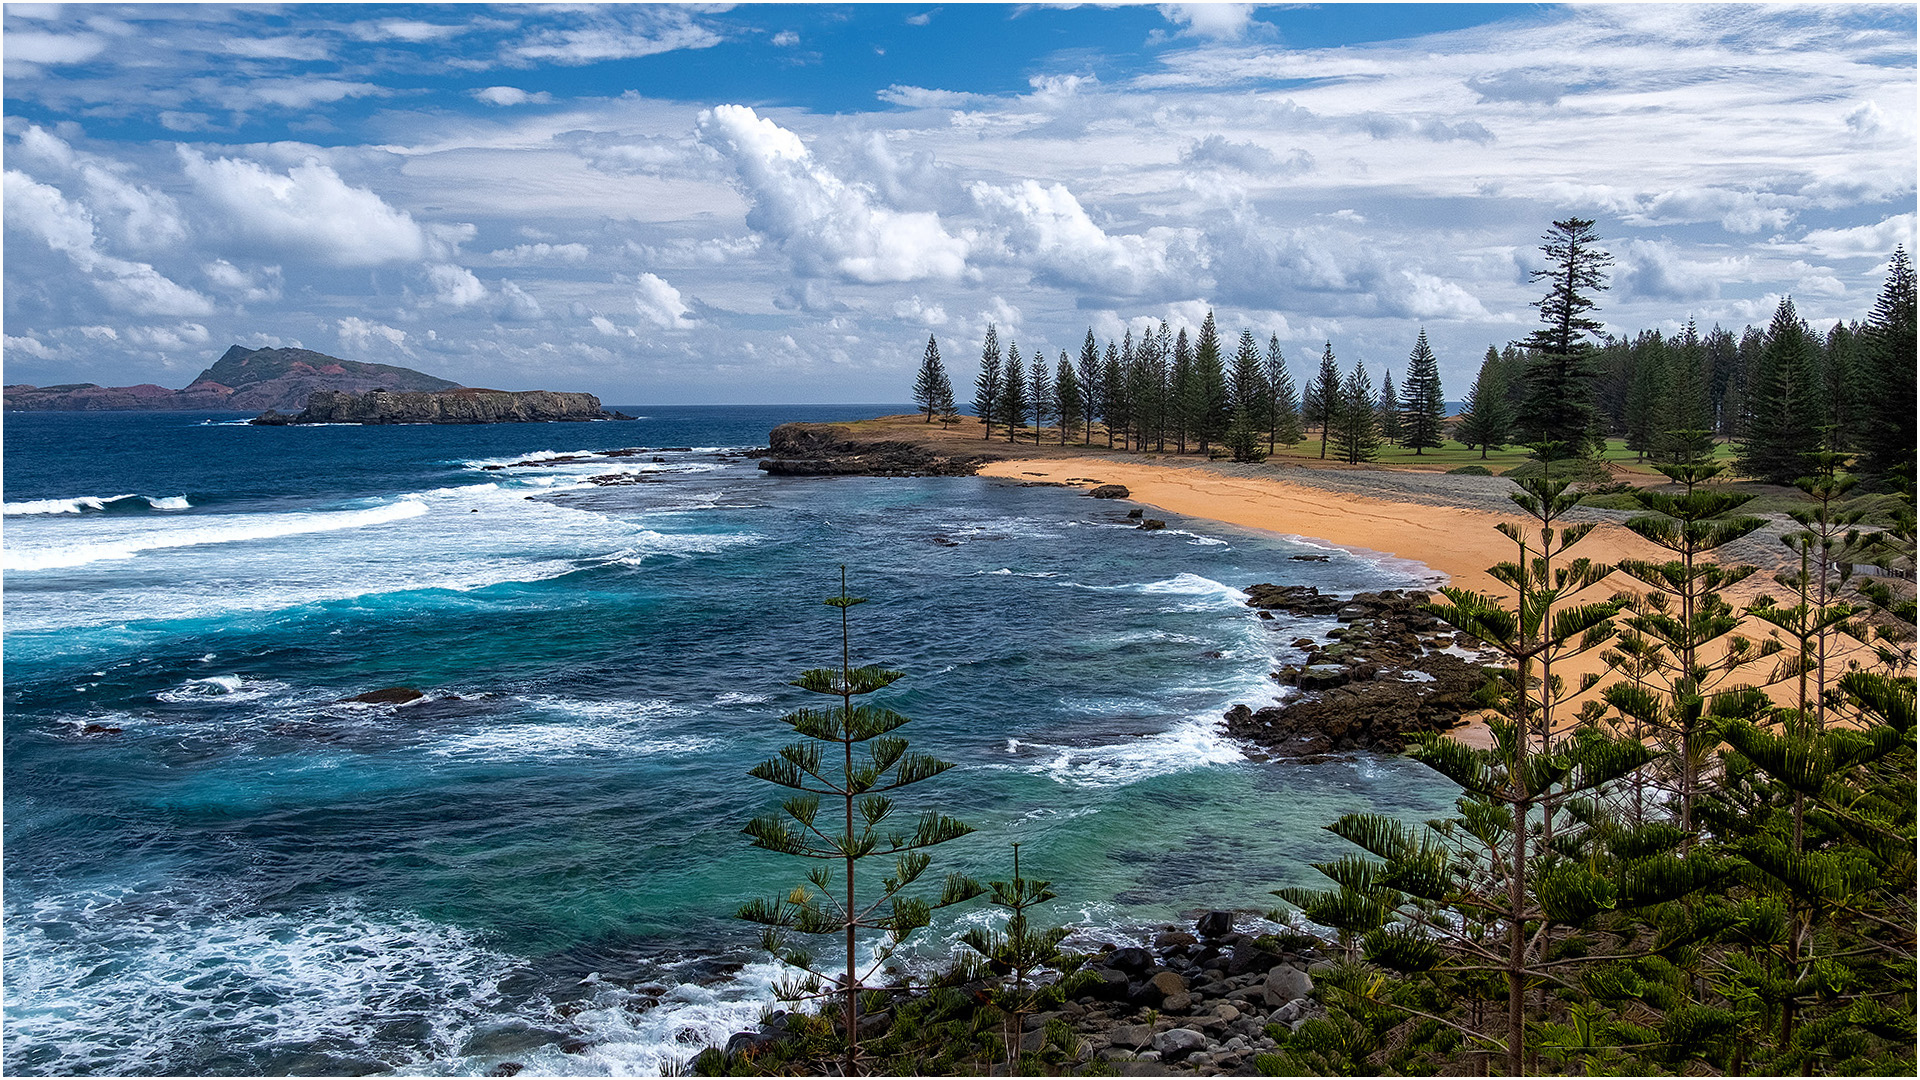 John Hodgson Highly Commended Norfolk Island Landscape 1 May 2020   Nature